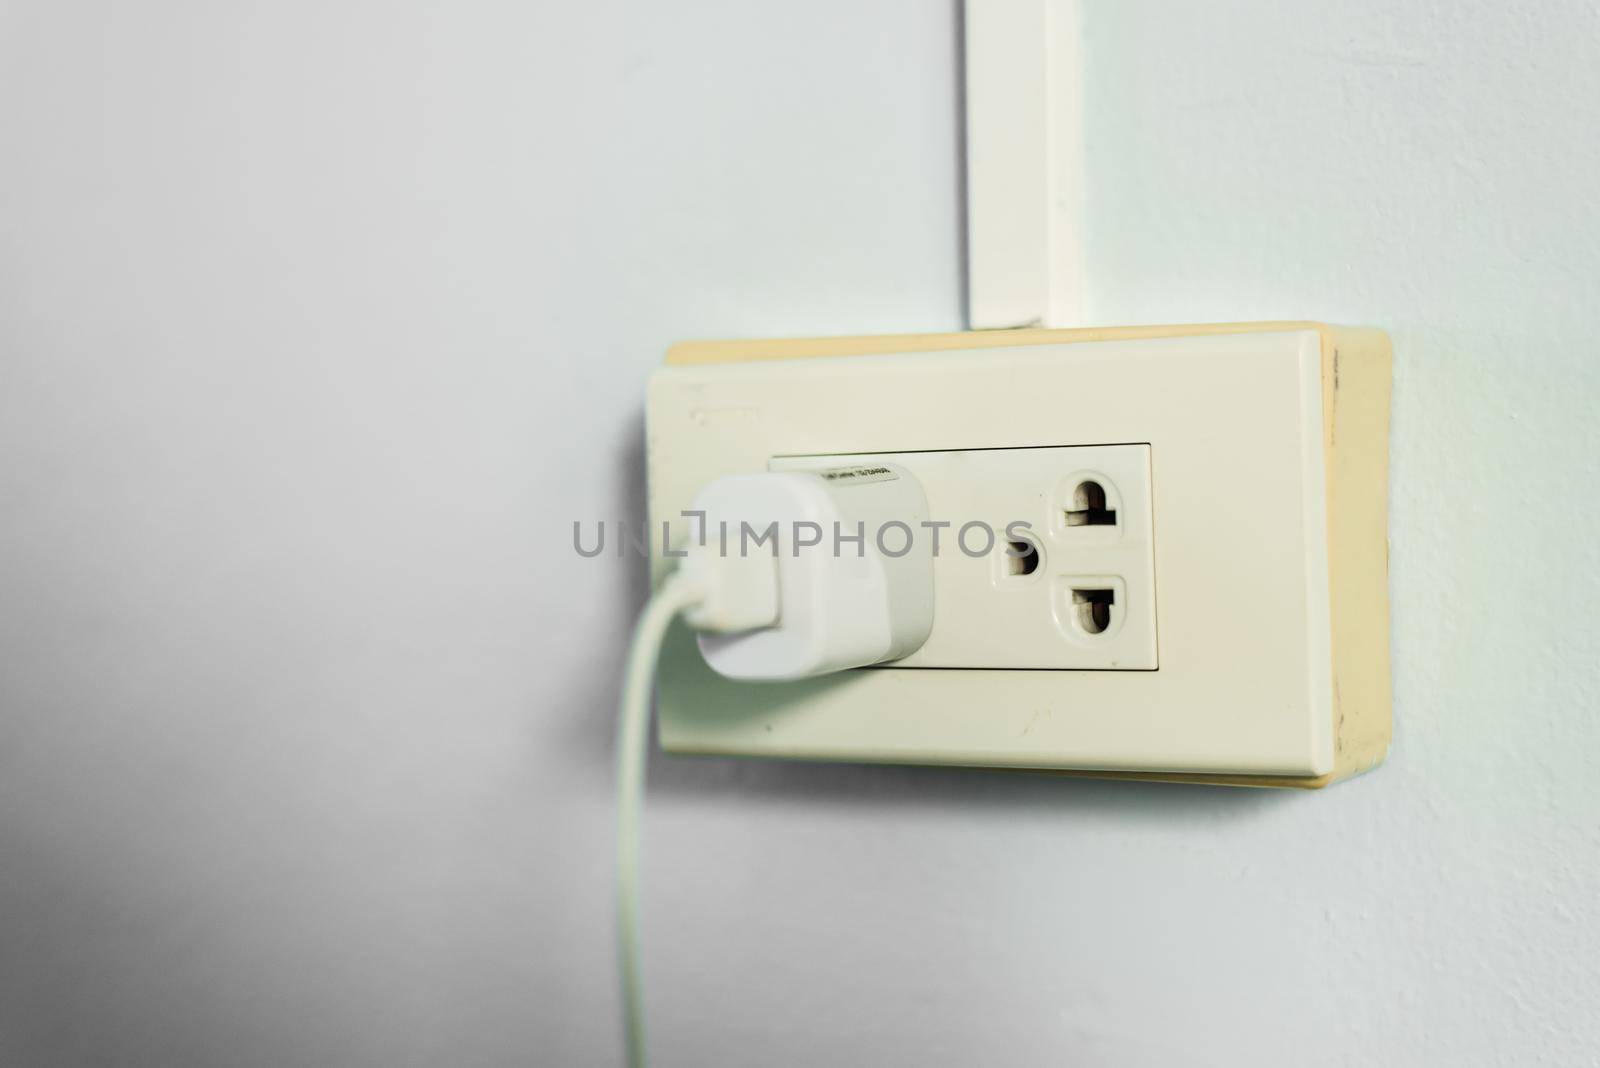 Plug power socket on the wall by Wmpix